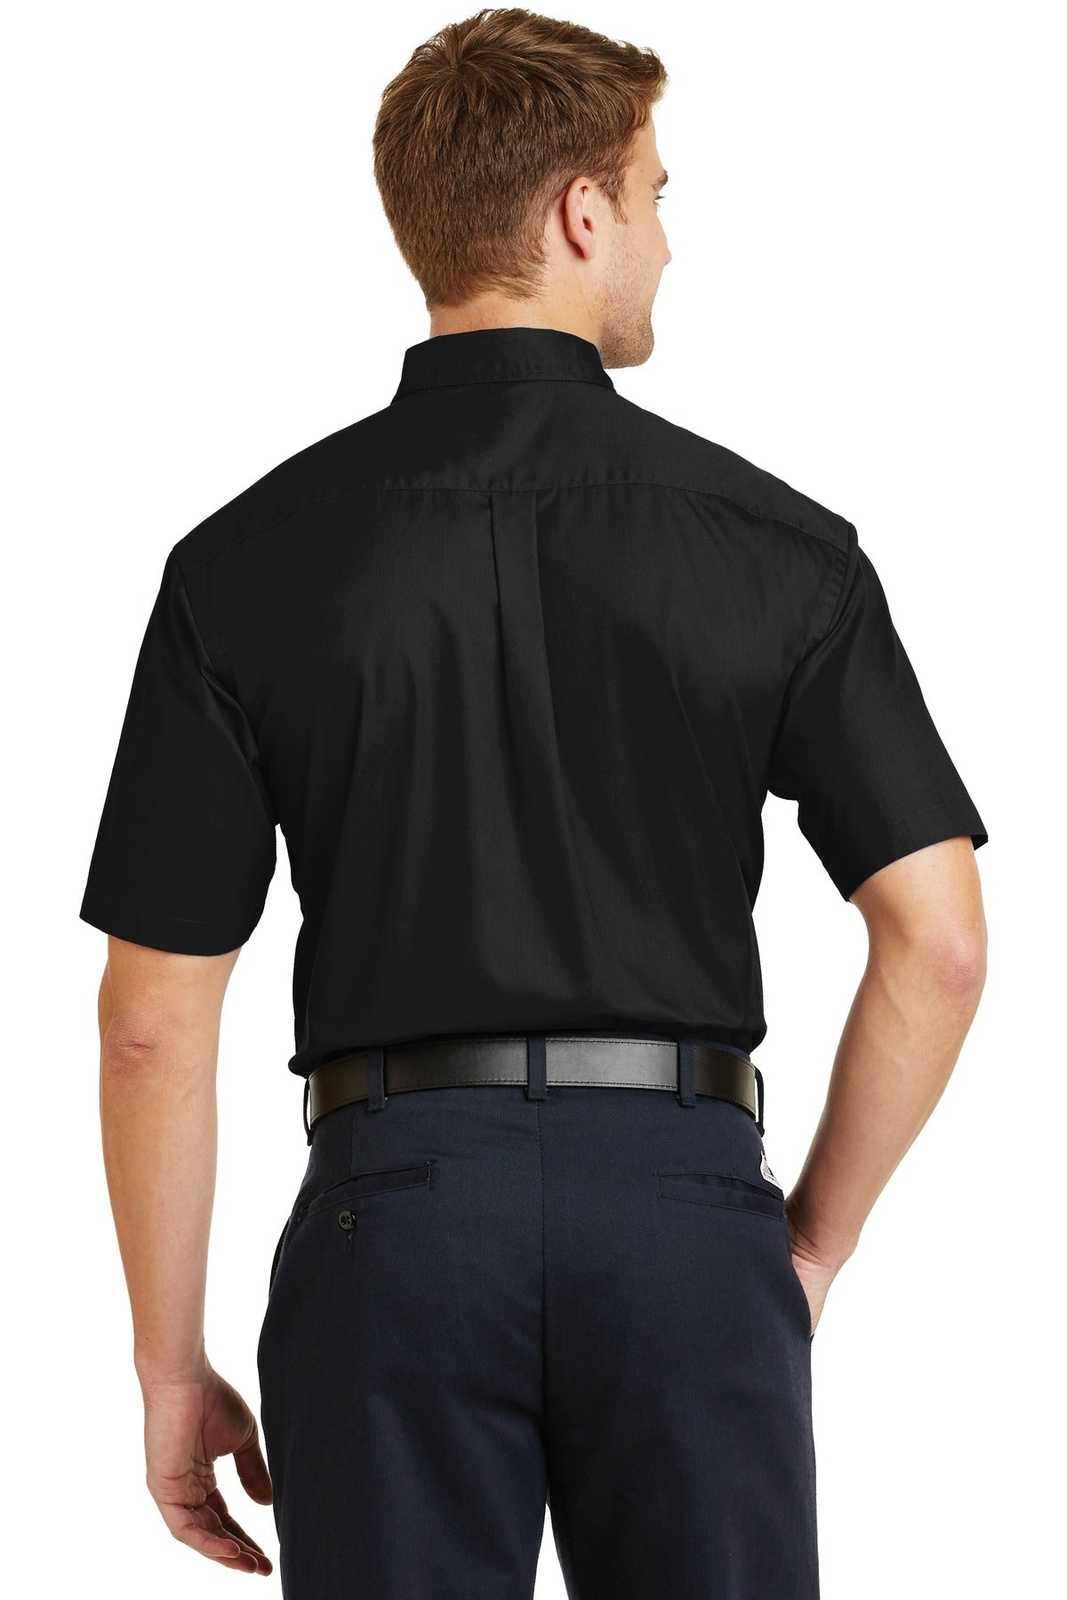 CornerStone SP18 Short Sleeve Superpro Twill Shirt - Black - HIT a Double - 2